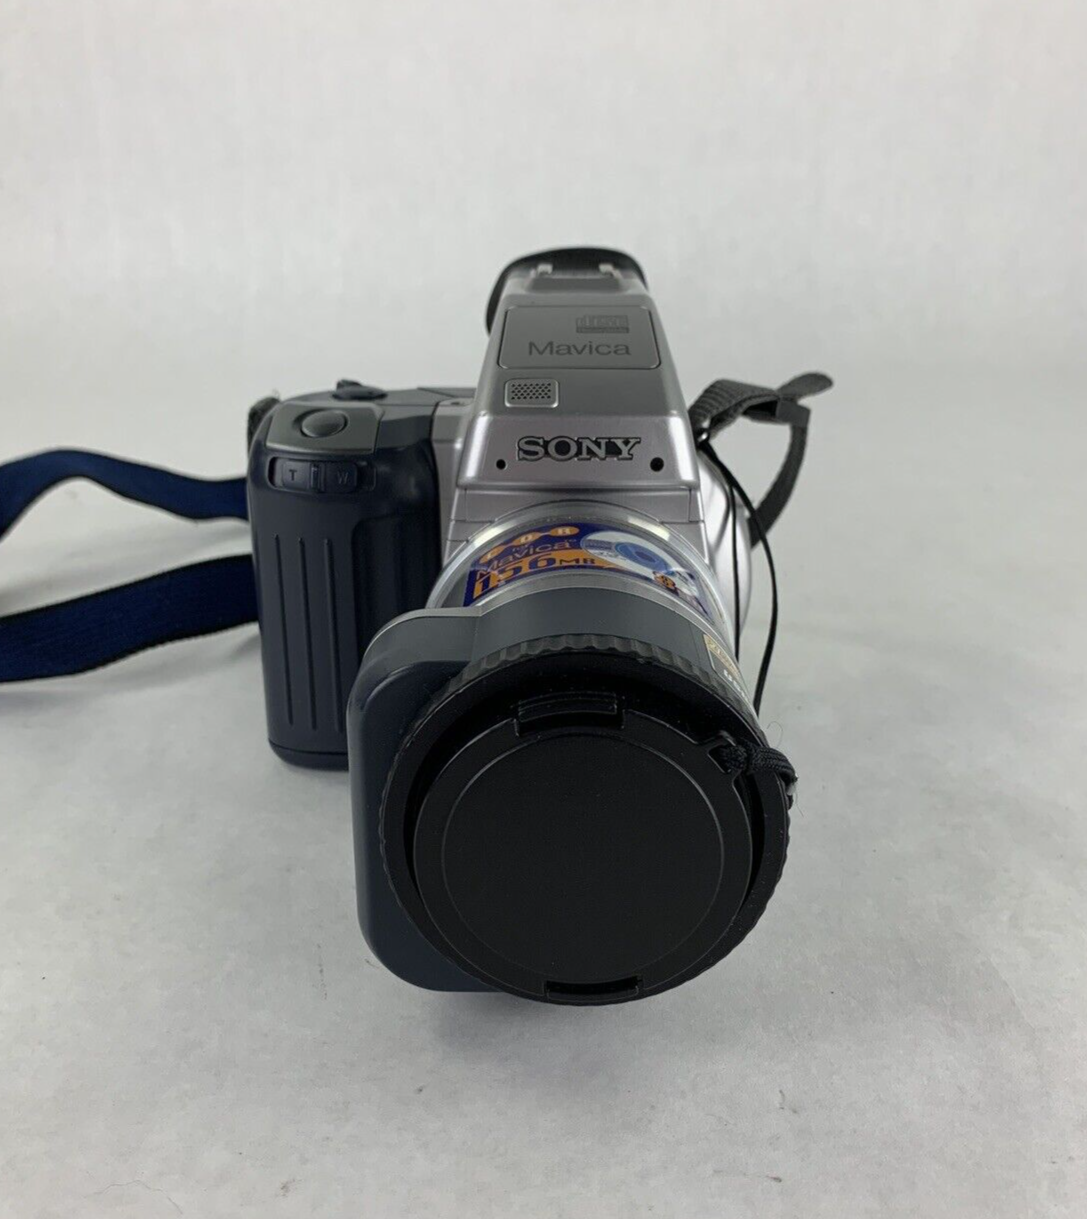 Sony Mavica 2.1 Megapixels Digital Camera MVC-CD1000 20x Zoom Untested